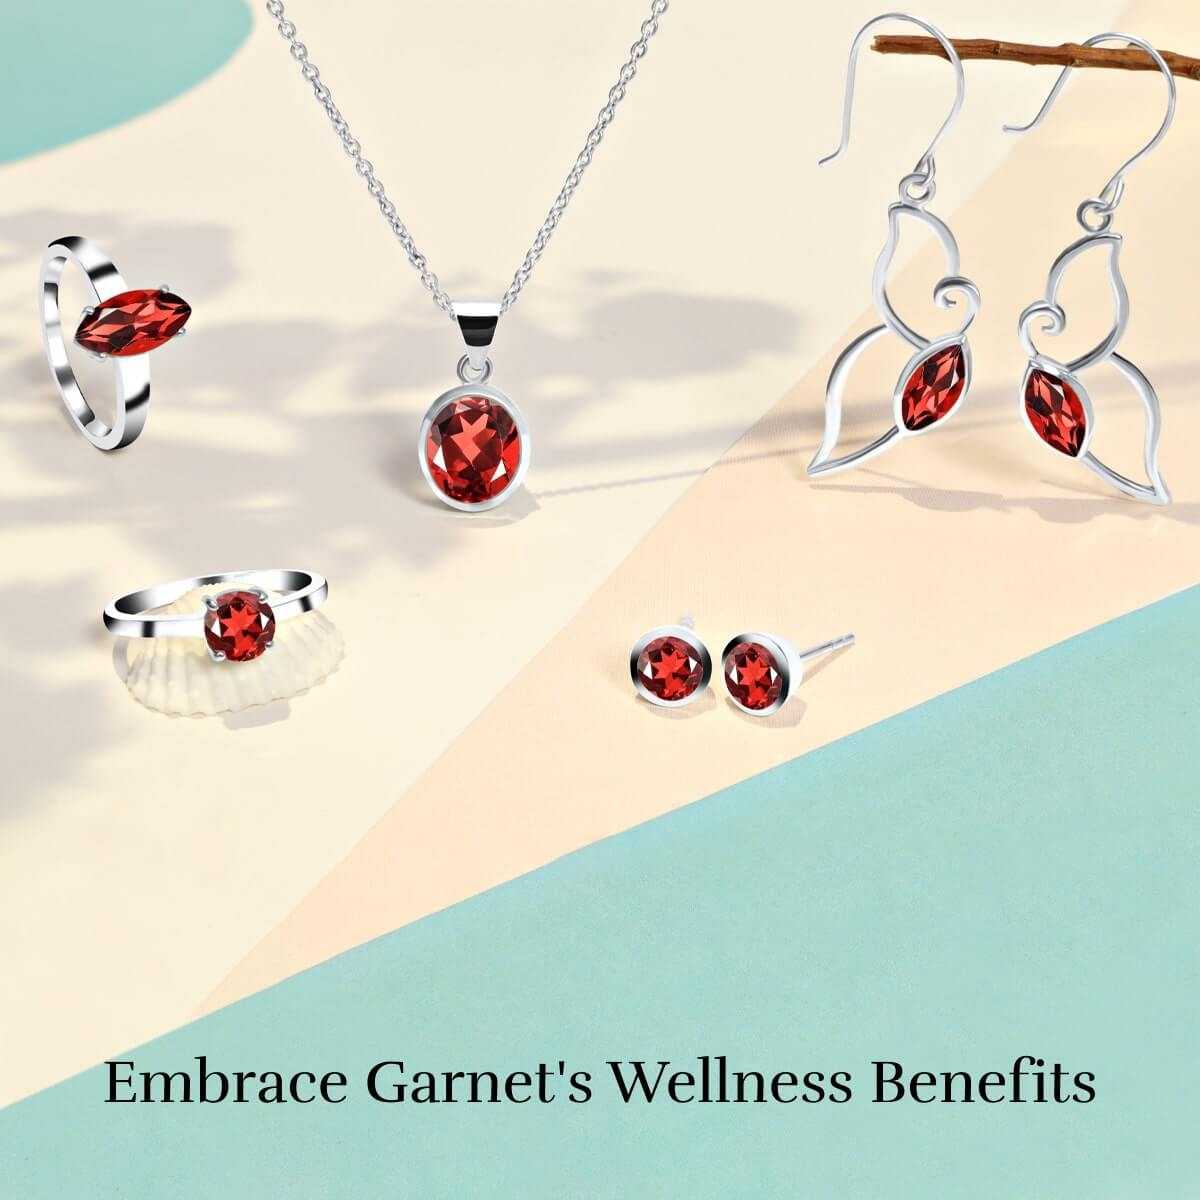 Garnet: Benefits of Wearing